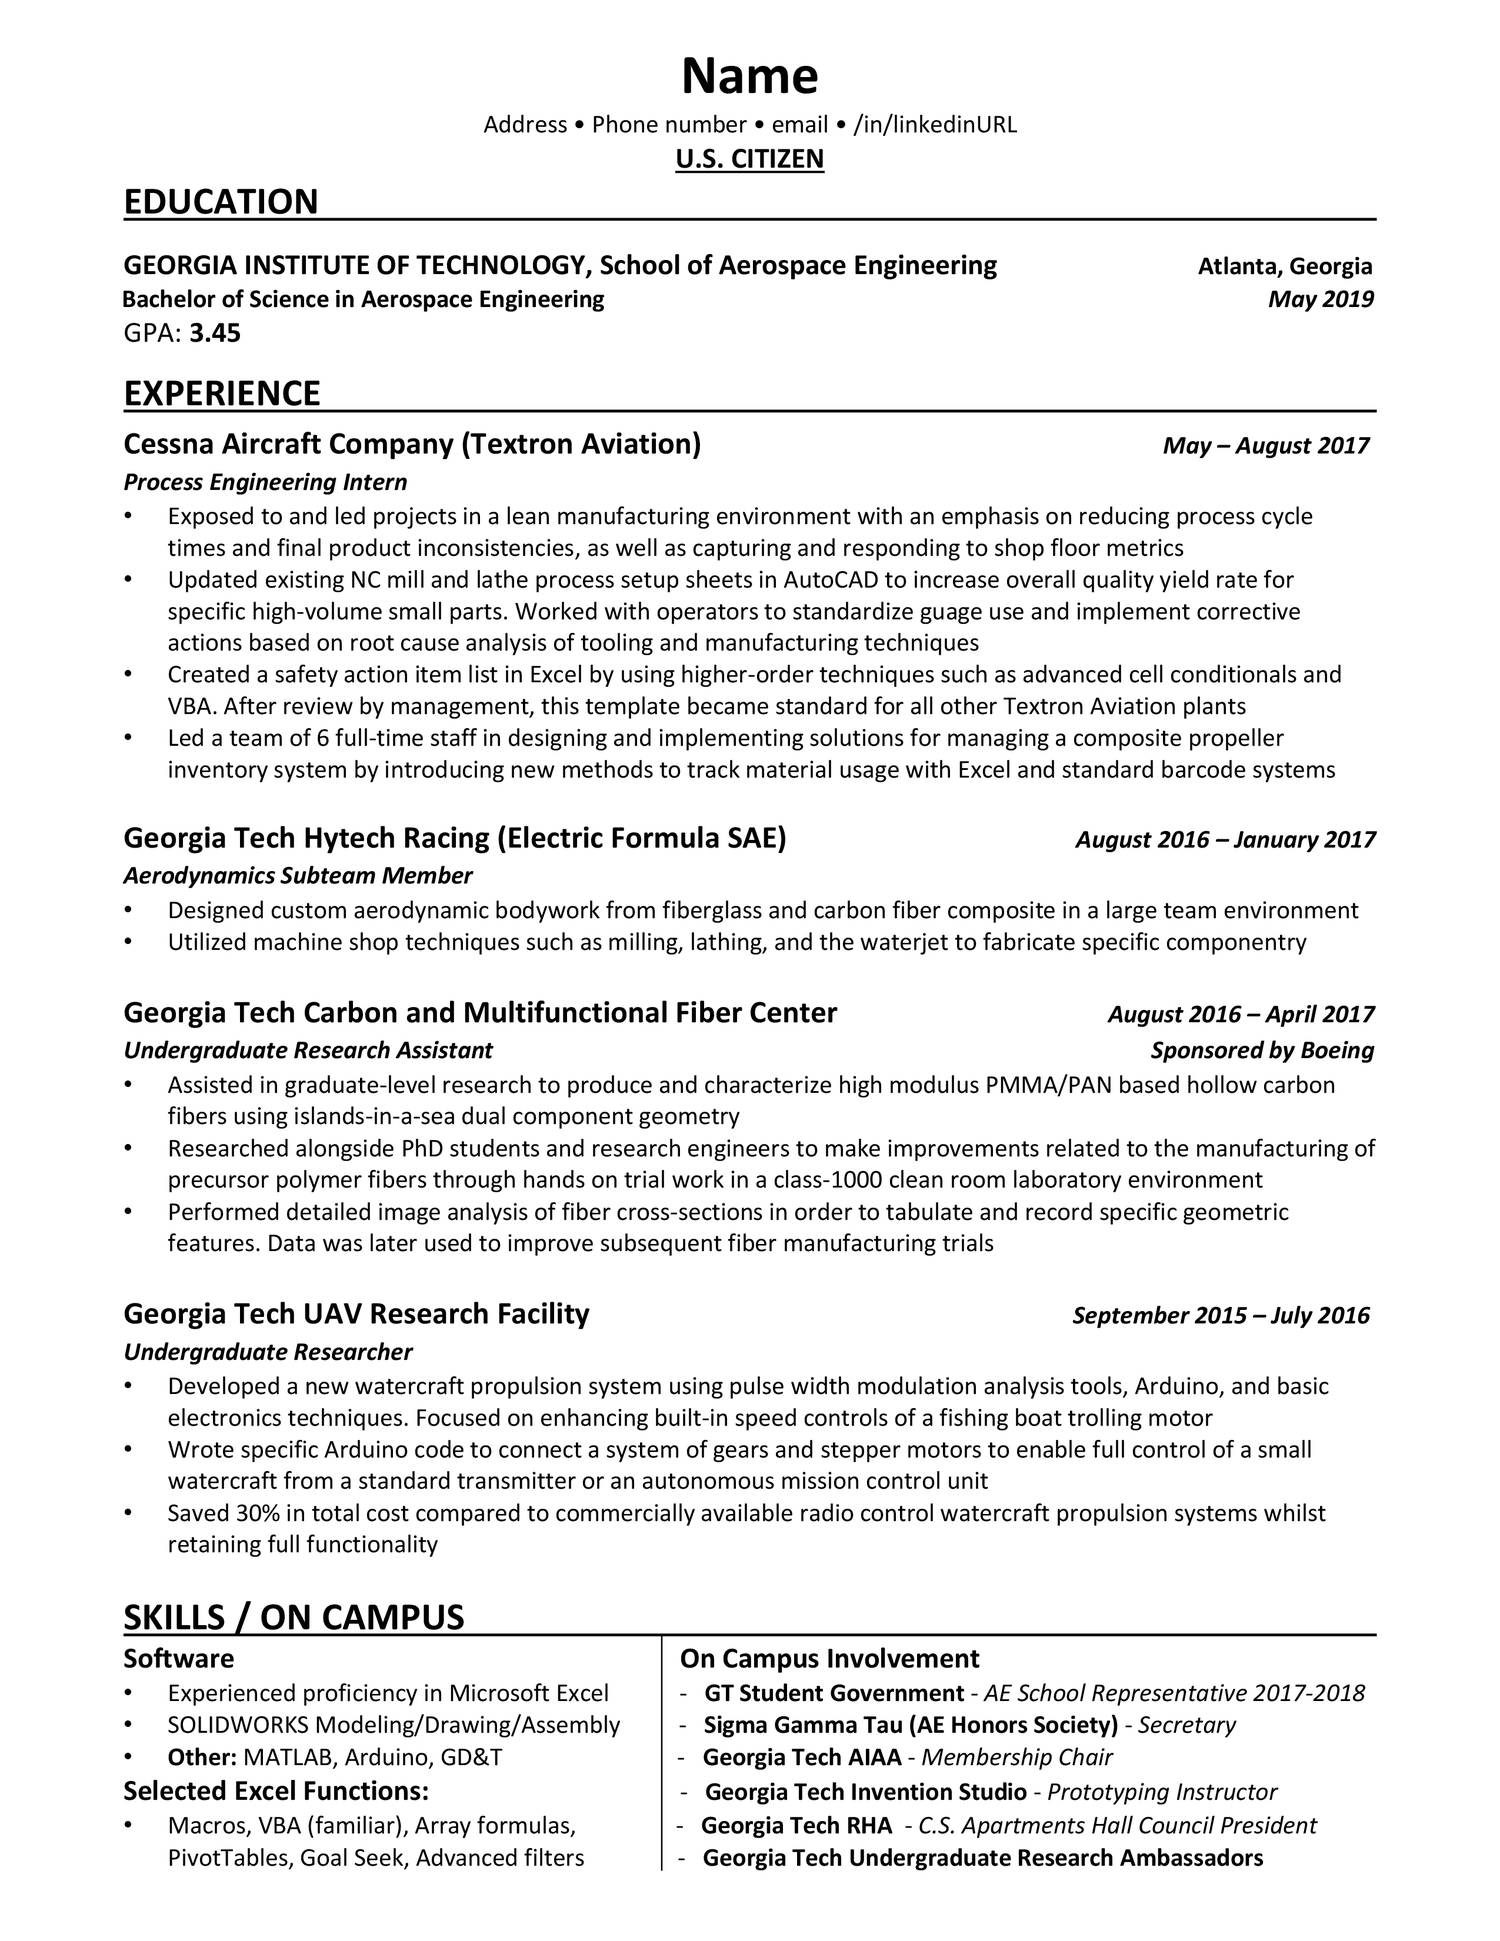 gatech resume help